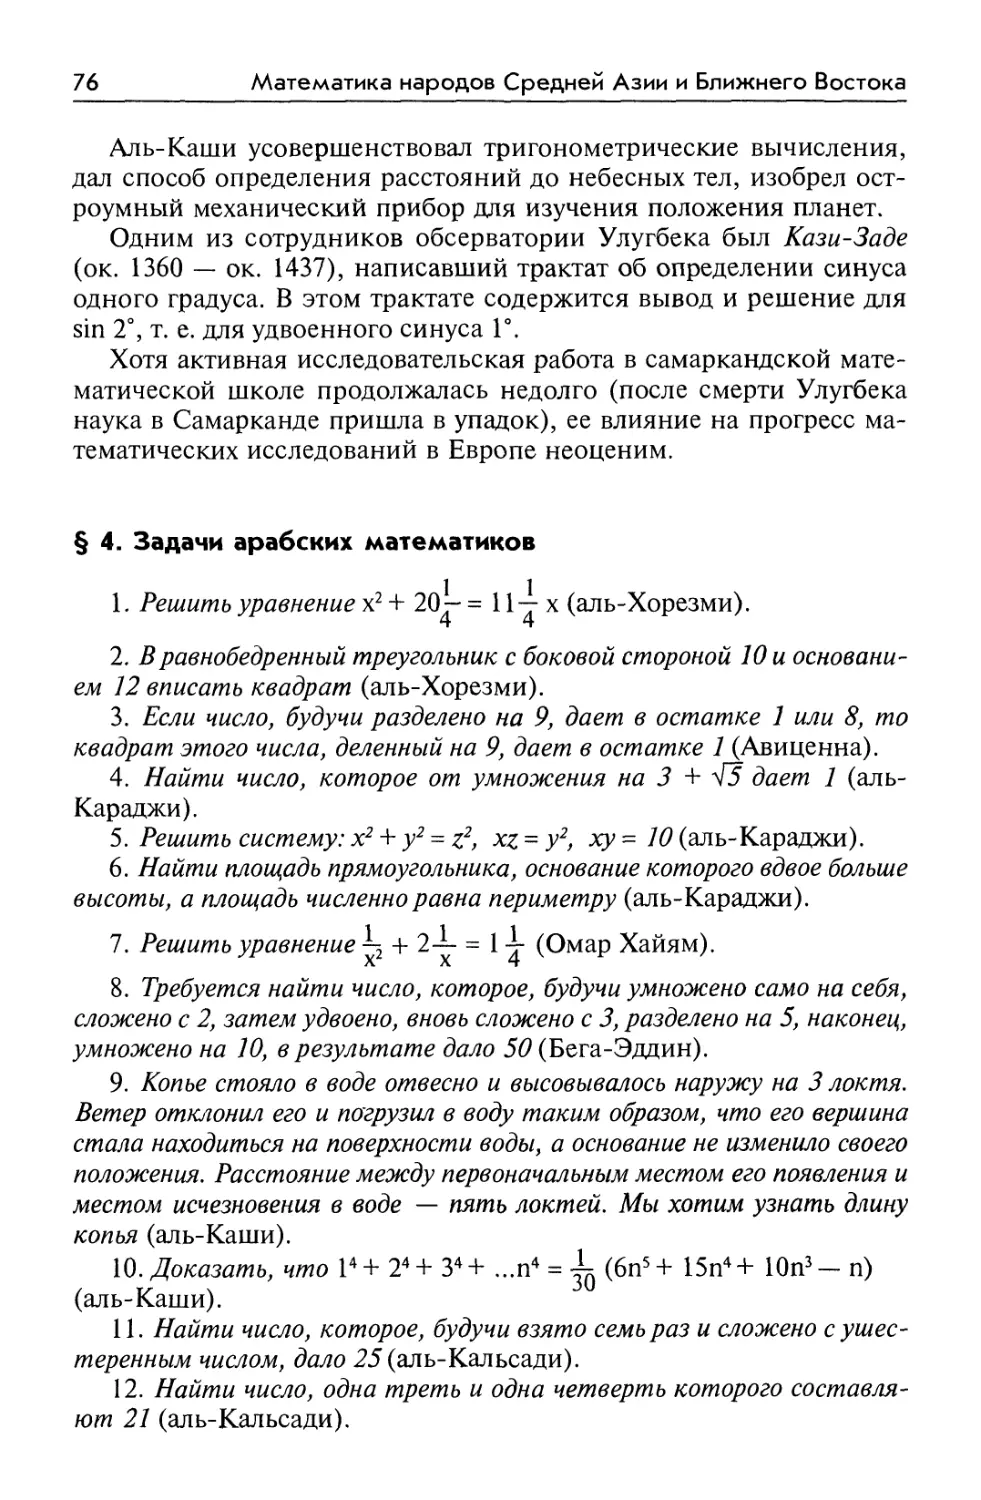 § 4. Задачи арабских математиков
§ 4. Tasks of Arabian mathematicians